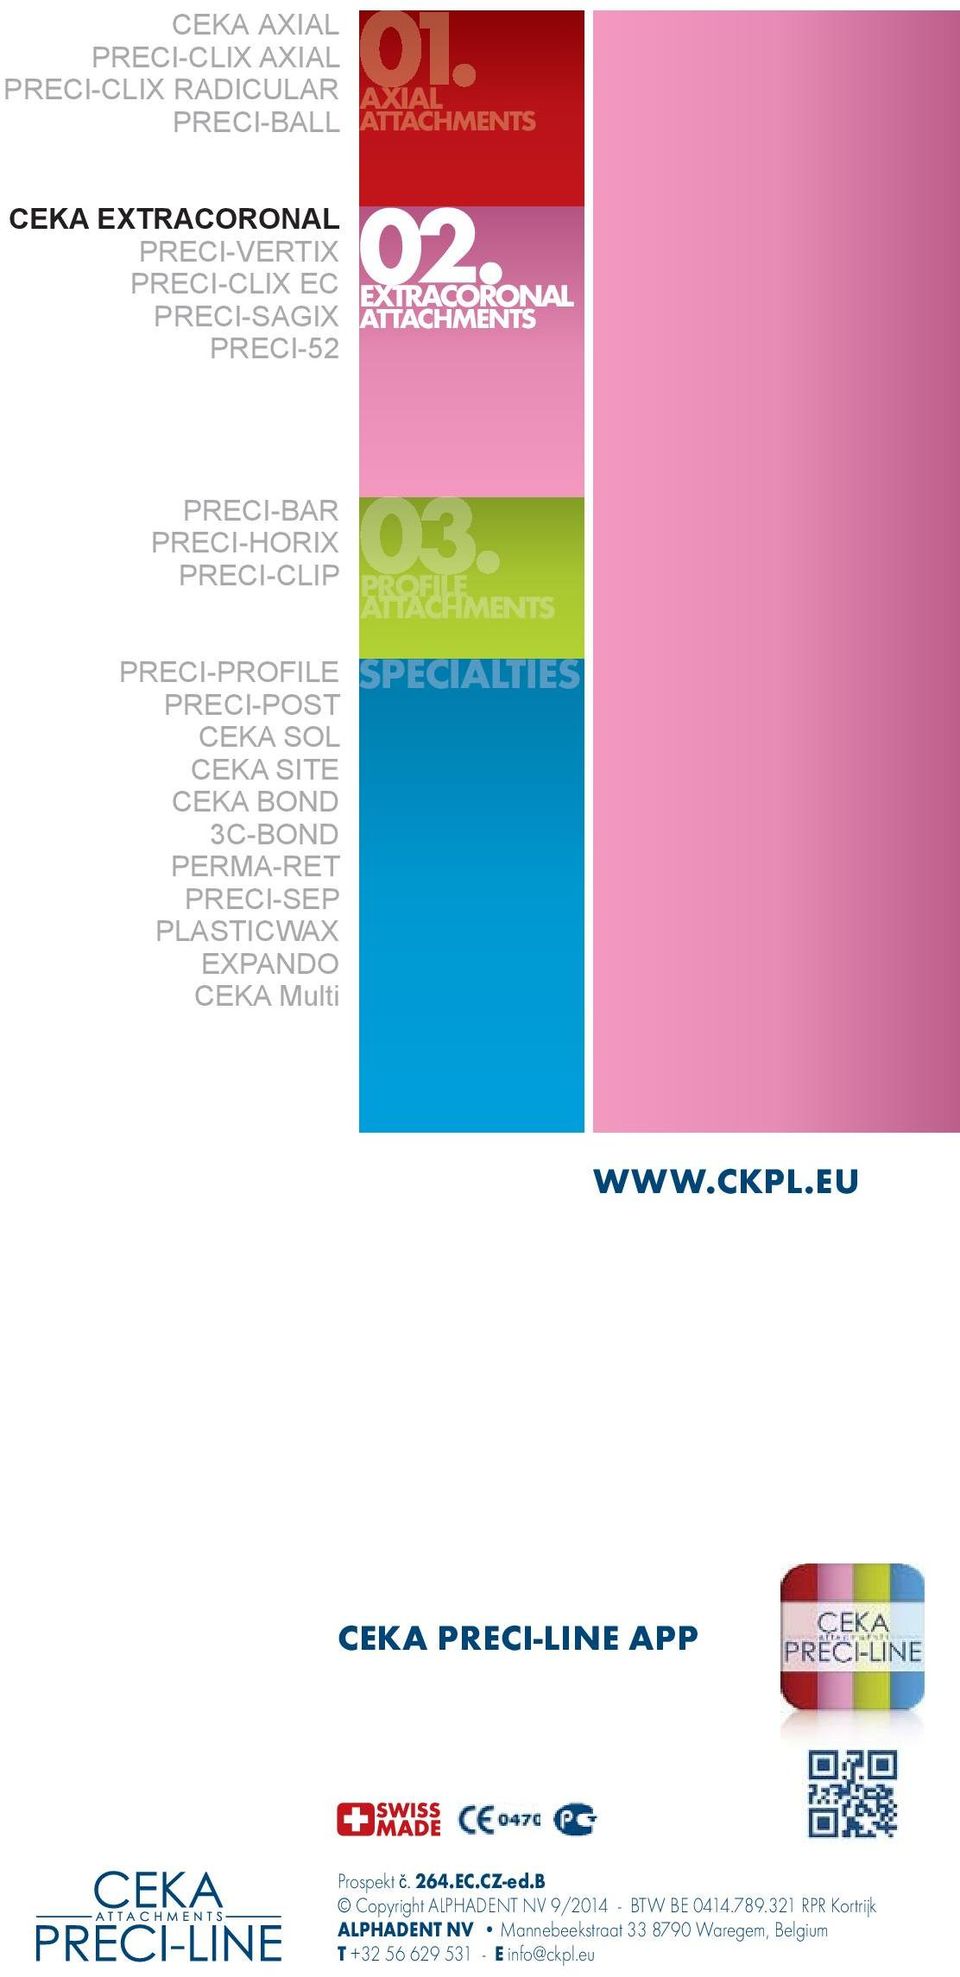 PERMA-RET PRECI-SEP PLASTICWAX EXPANDO CEKA Multi PROFILE ATTACHMENTS SPECIALTIES IES CEKA PRECI-LINE APP Prospekt č. 264.EC.CZ-ed.